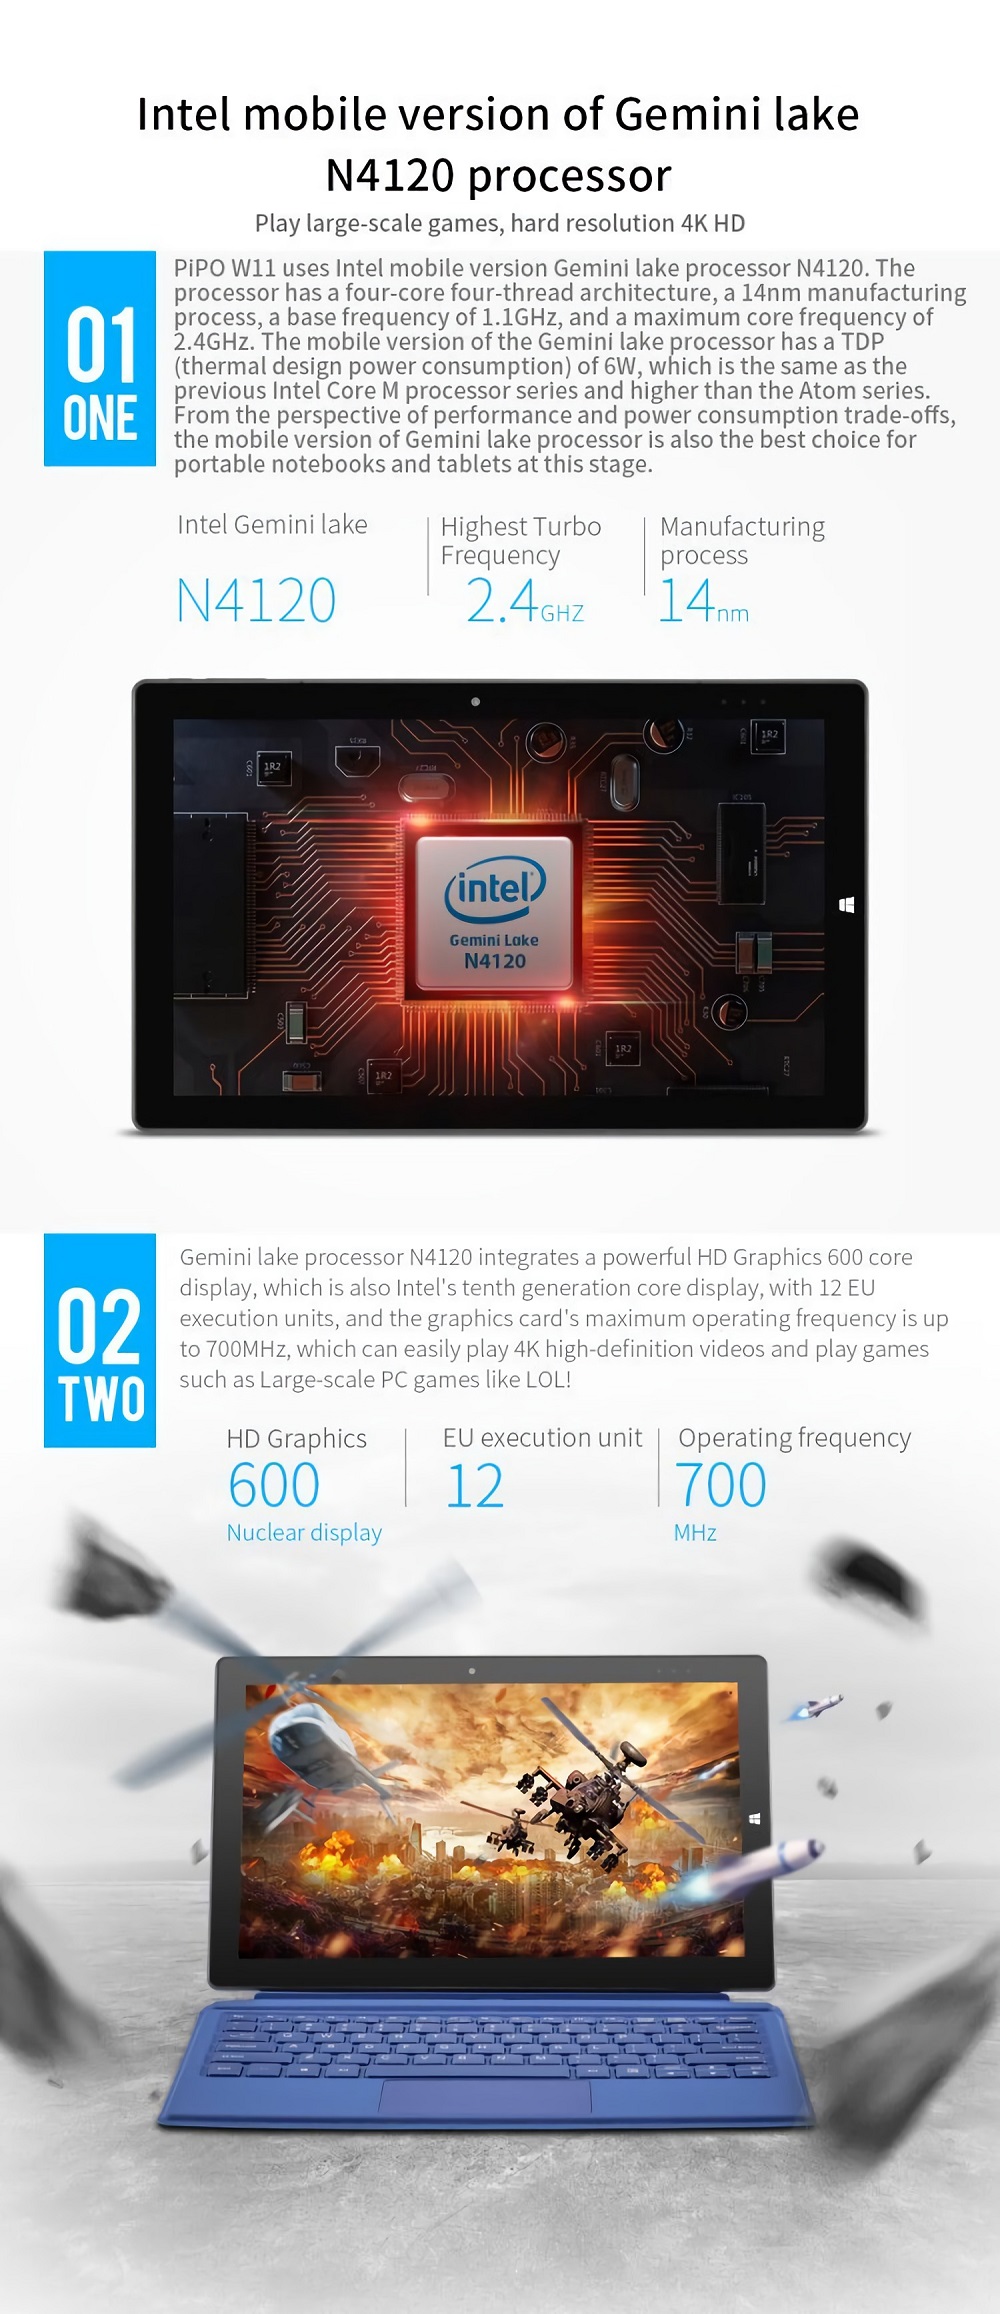 PIPO W11 Intel Gemini Lake N4120 8GB RAM 128GB ROM+512GB SSD 11.6 Inch Windows 10 Tablet With Keyboard Stylus Pen 5